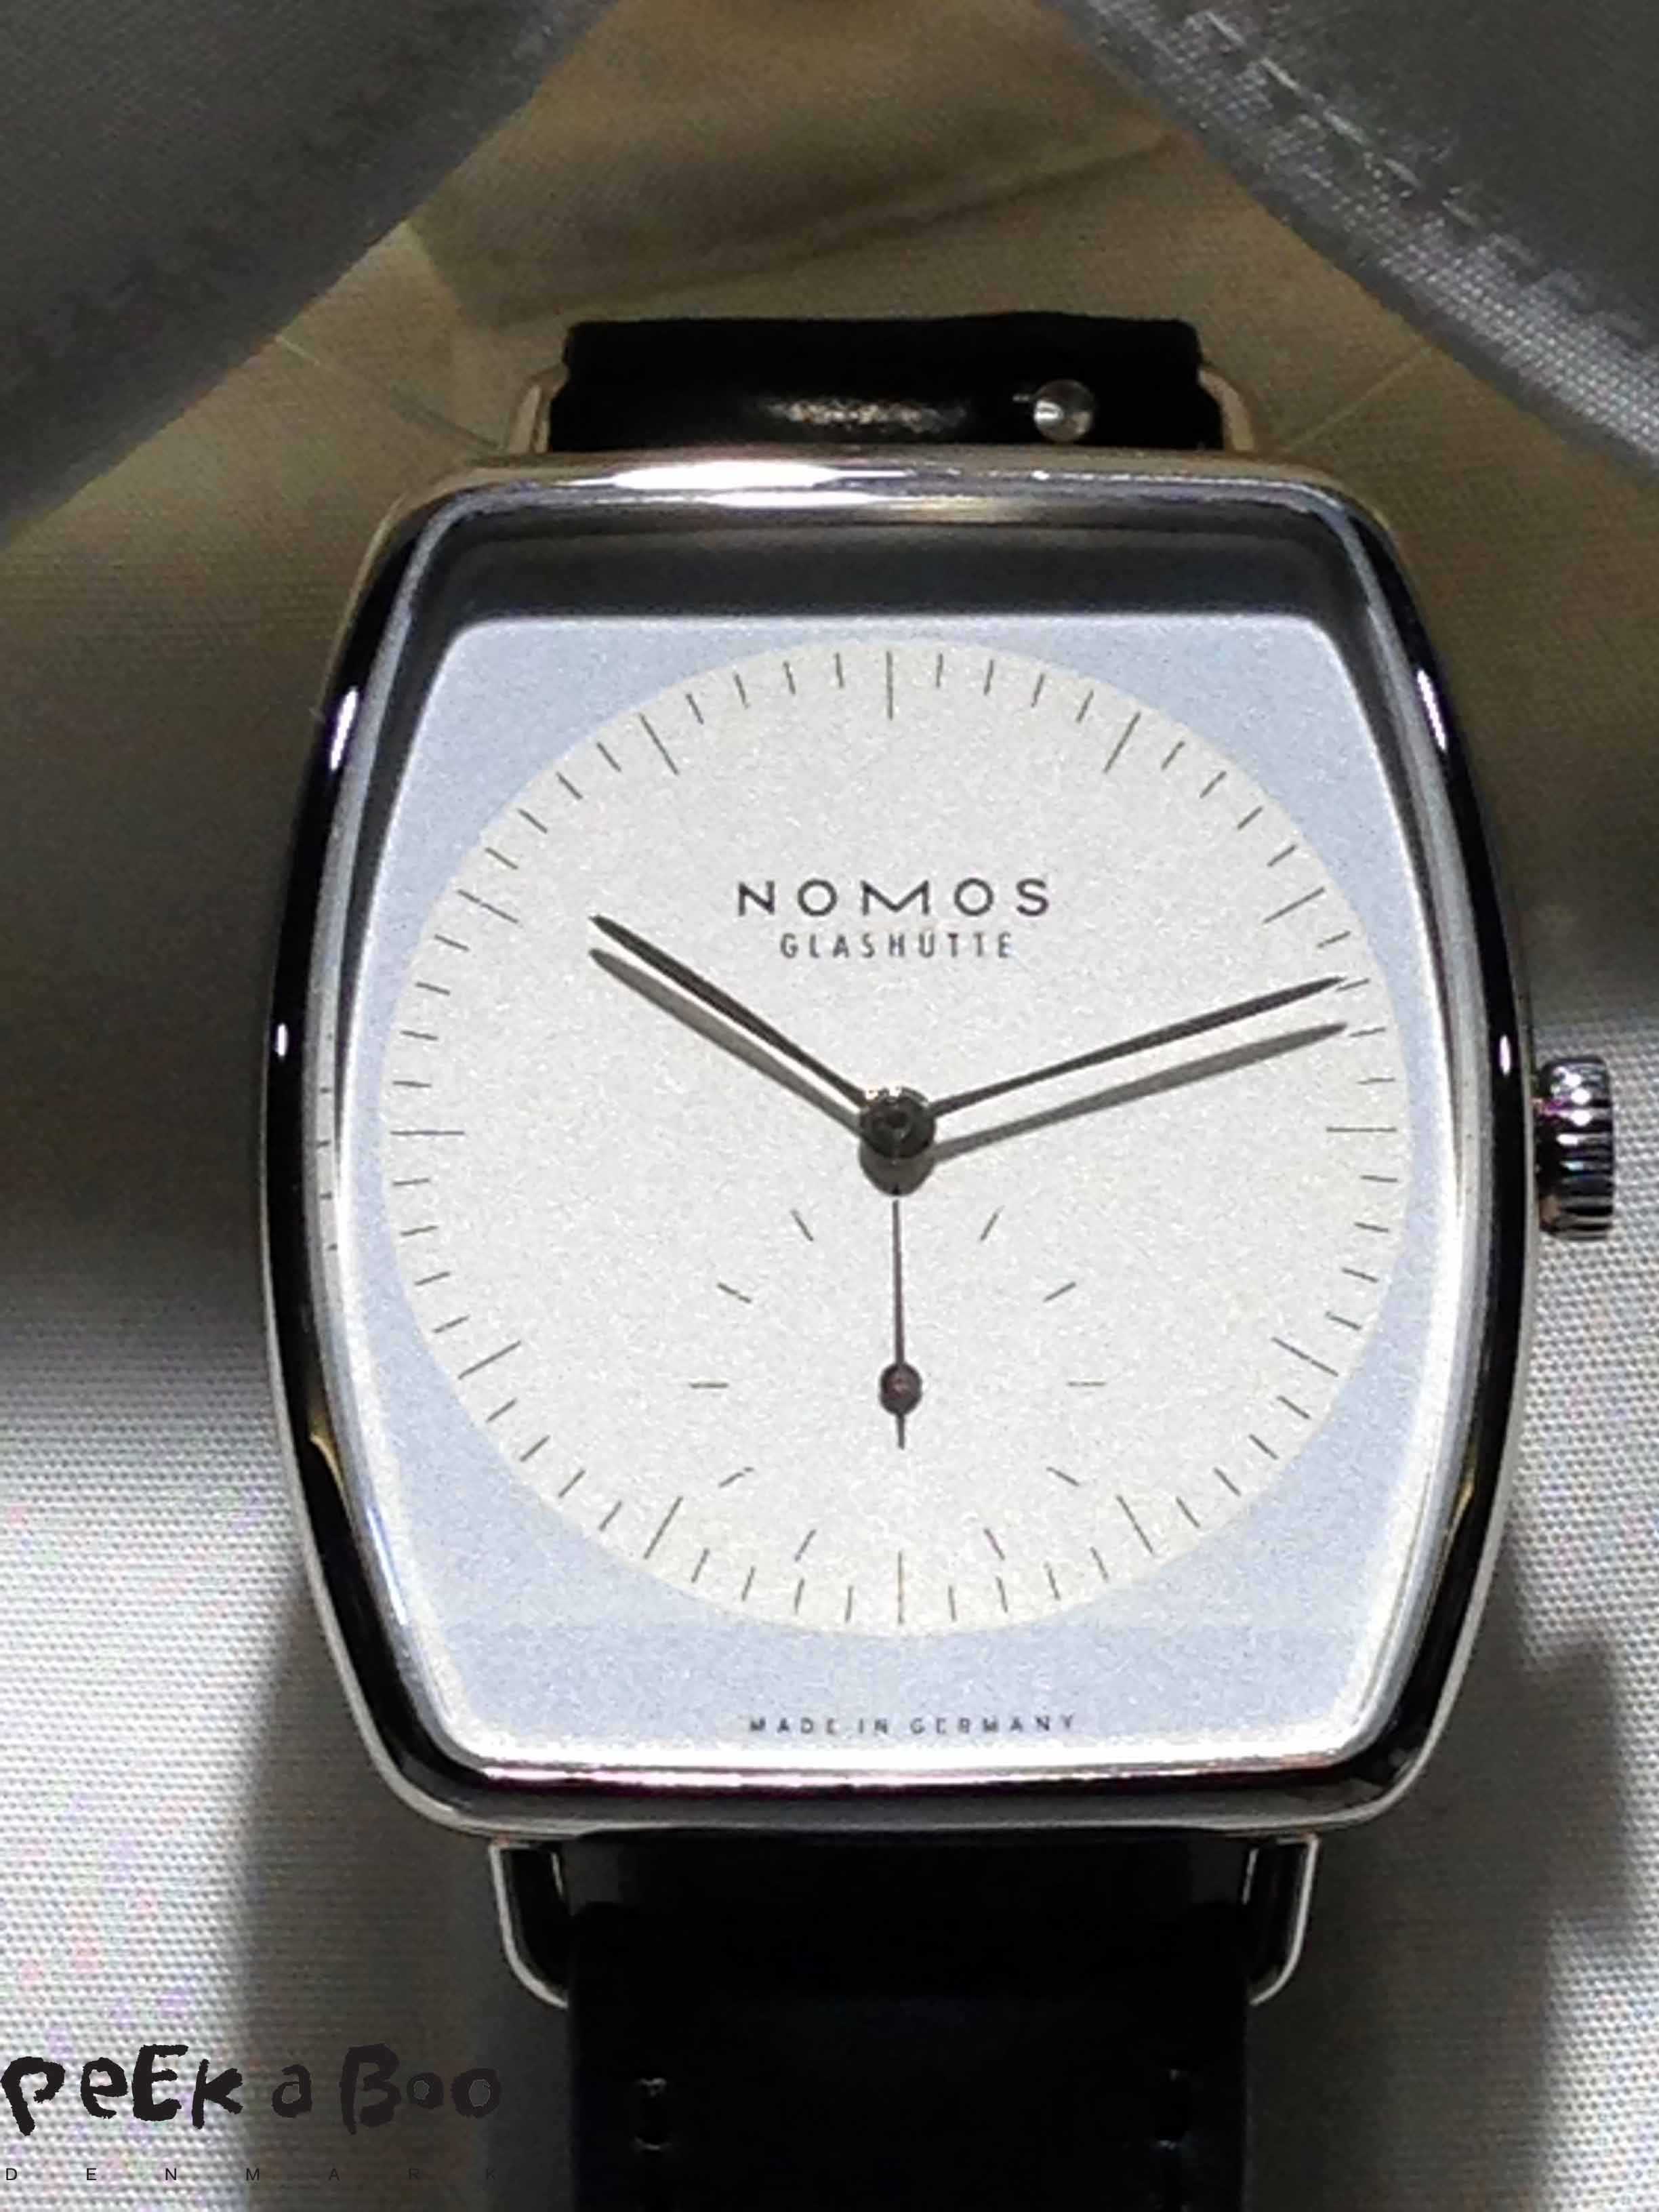 Nomos Glashüttel. Comtemperary design in Watch making.